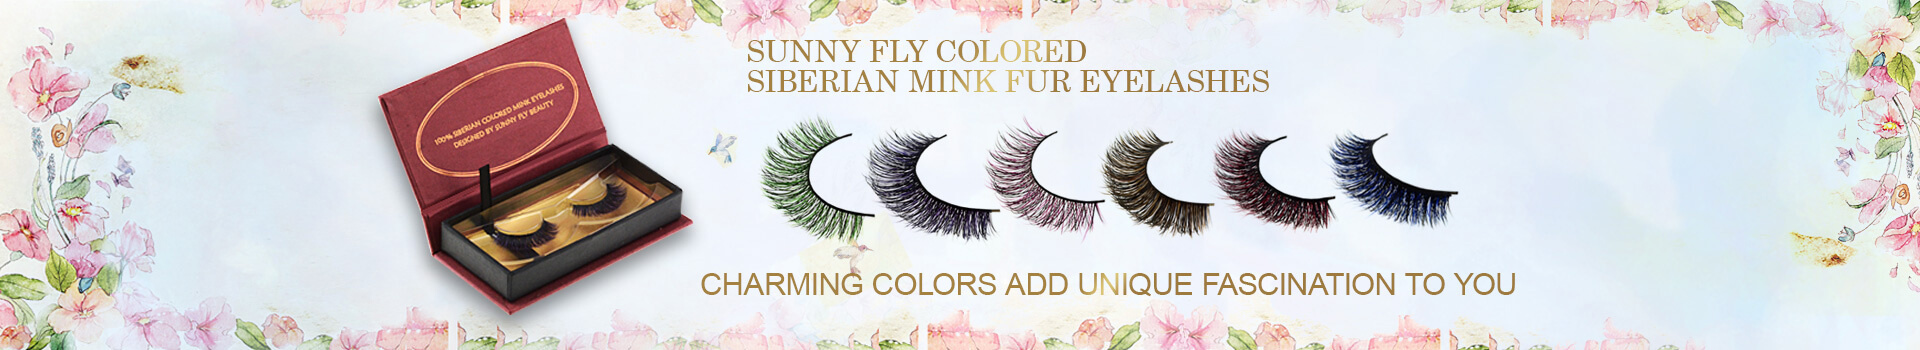 Farget Siberian Mink Fur Eyelashes MC11